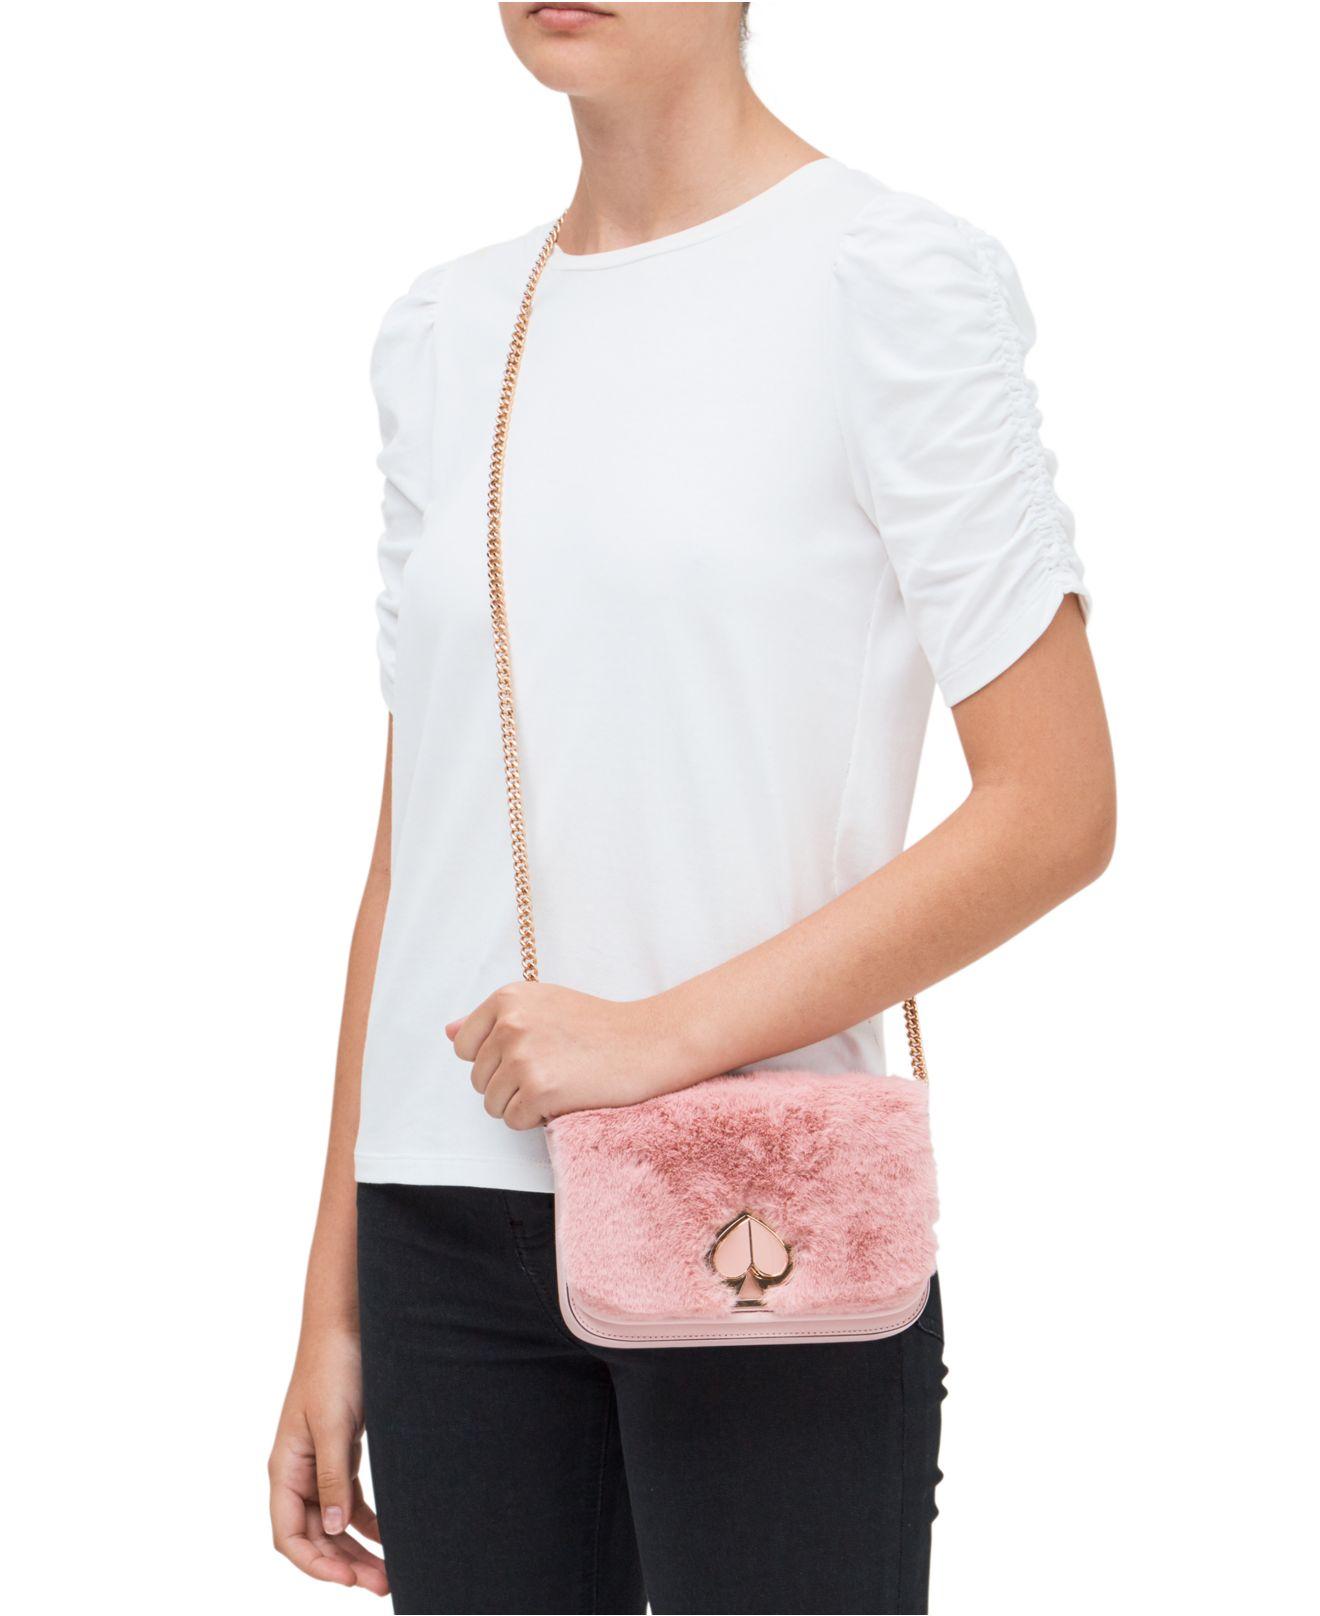 Kate Spade Nicola Faux Fur Twistlock Small Convertible Chain Shoulder Bag  in Pink